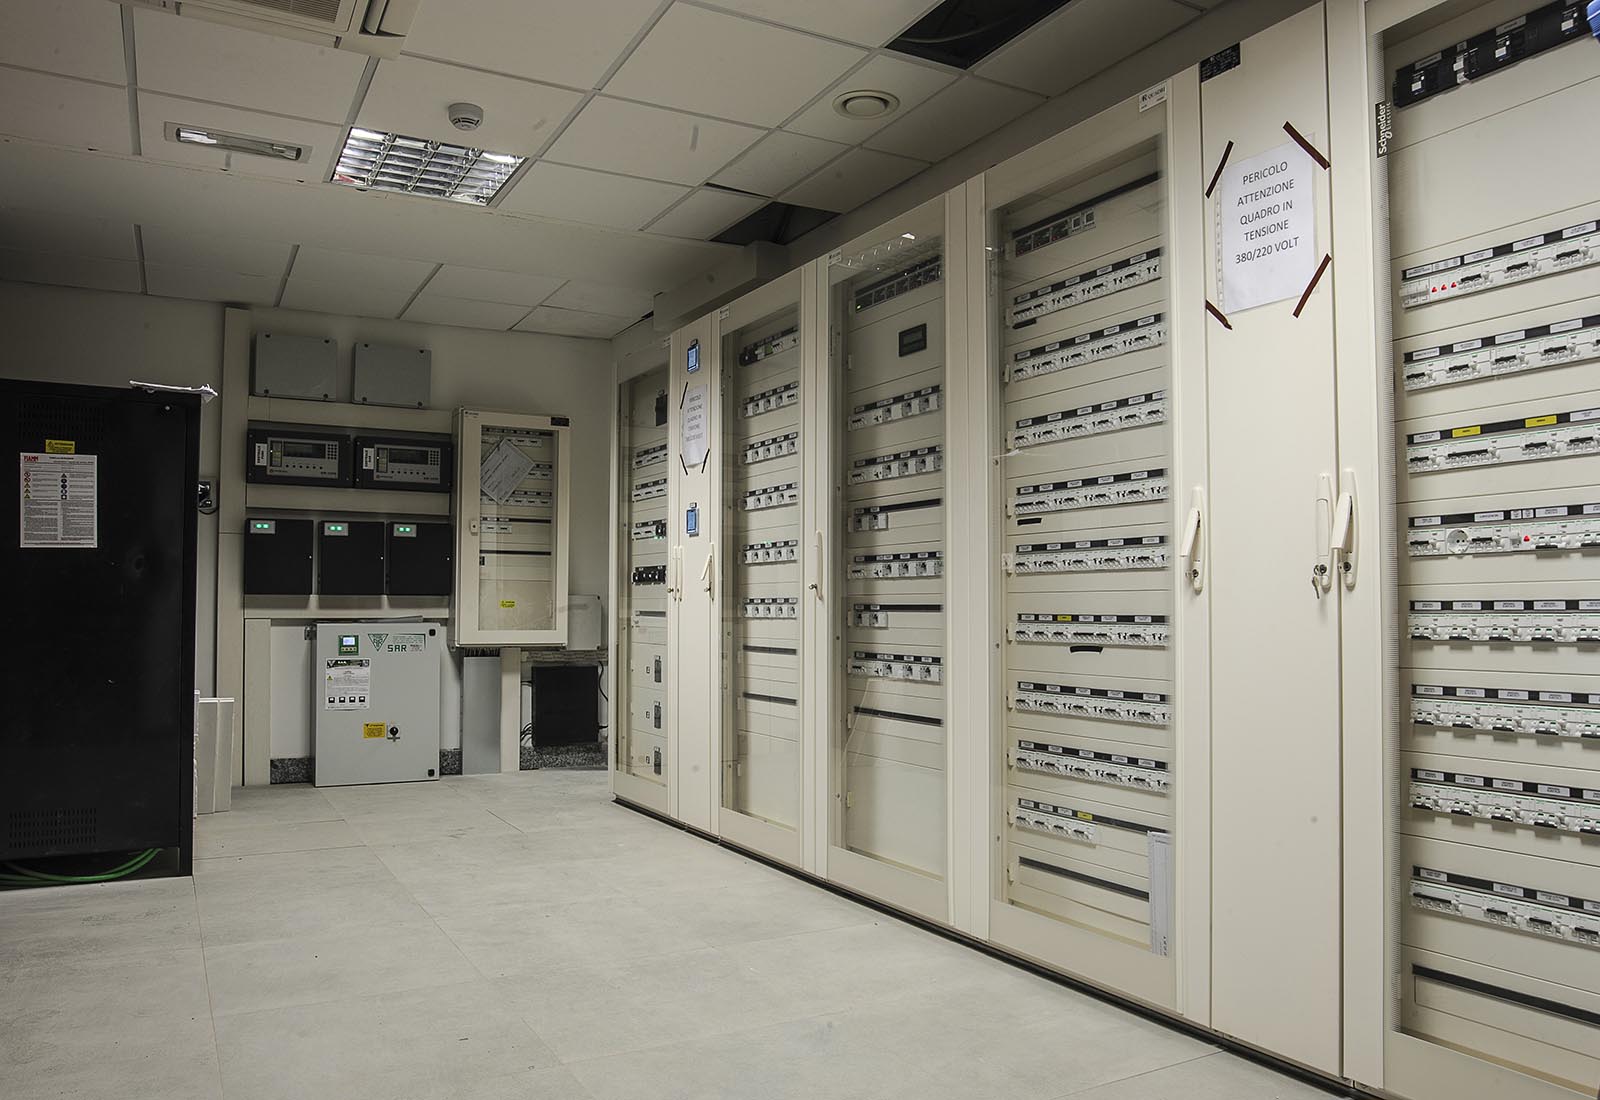 Underground garage in Adriano street Milan - The electrical panels room